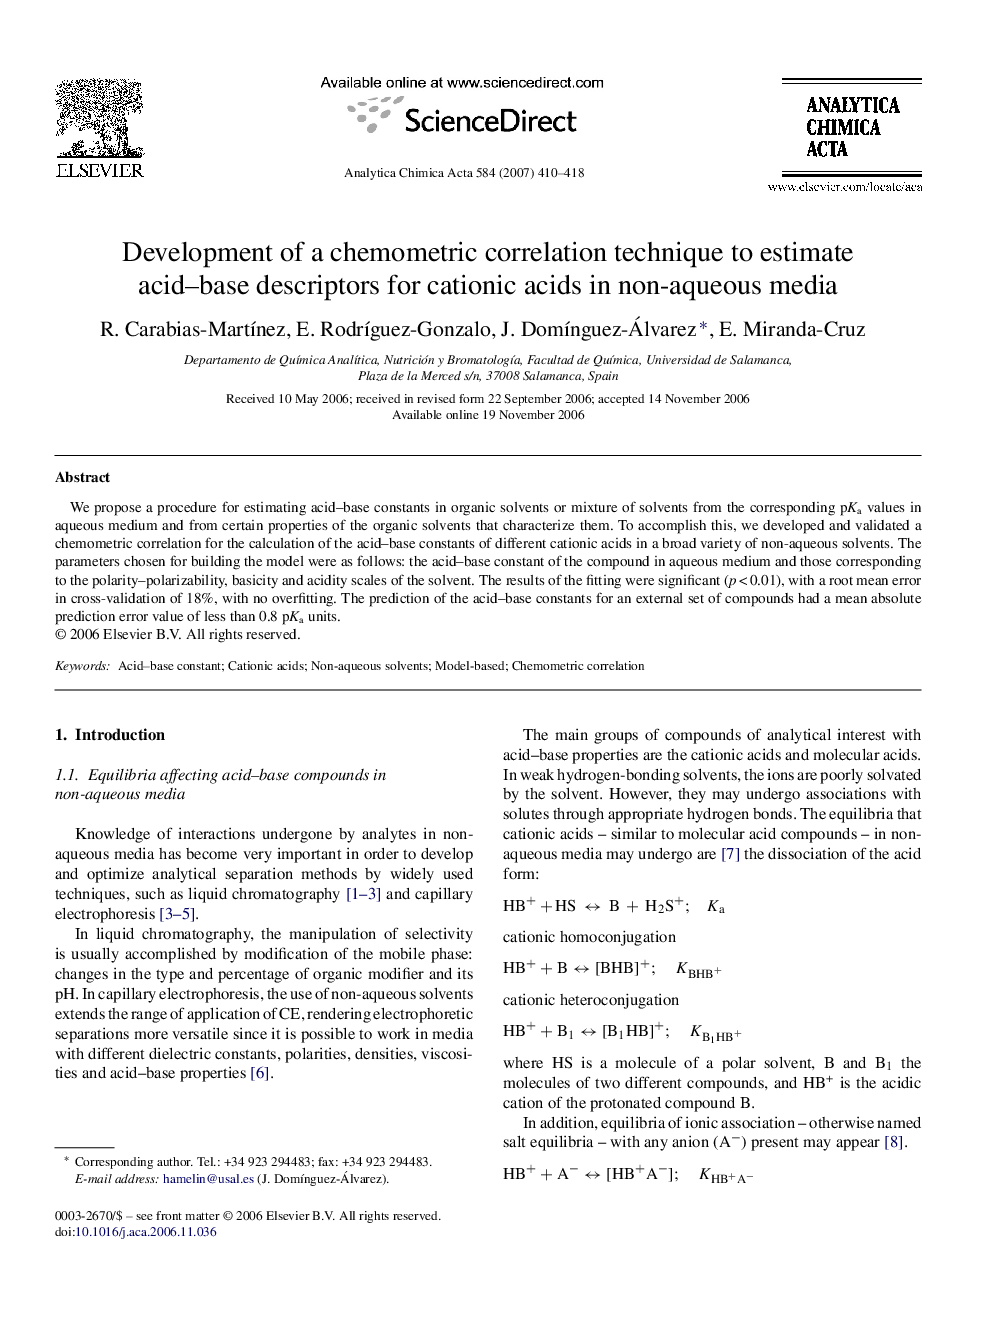 Development of a chemometric correlation technique to estimate acid–base descriptors for cationic acids in non-aqueous media